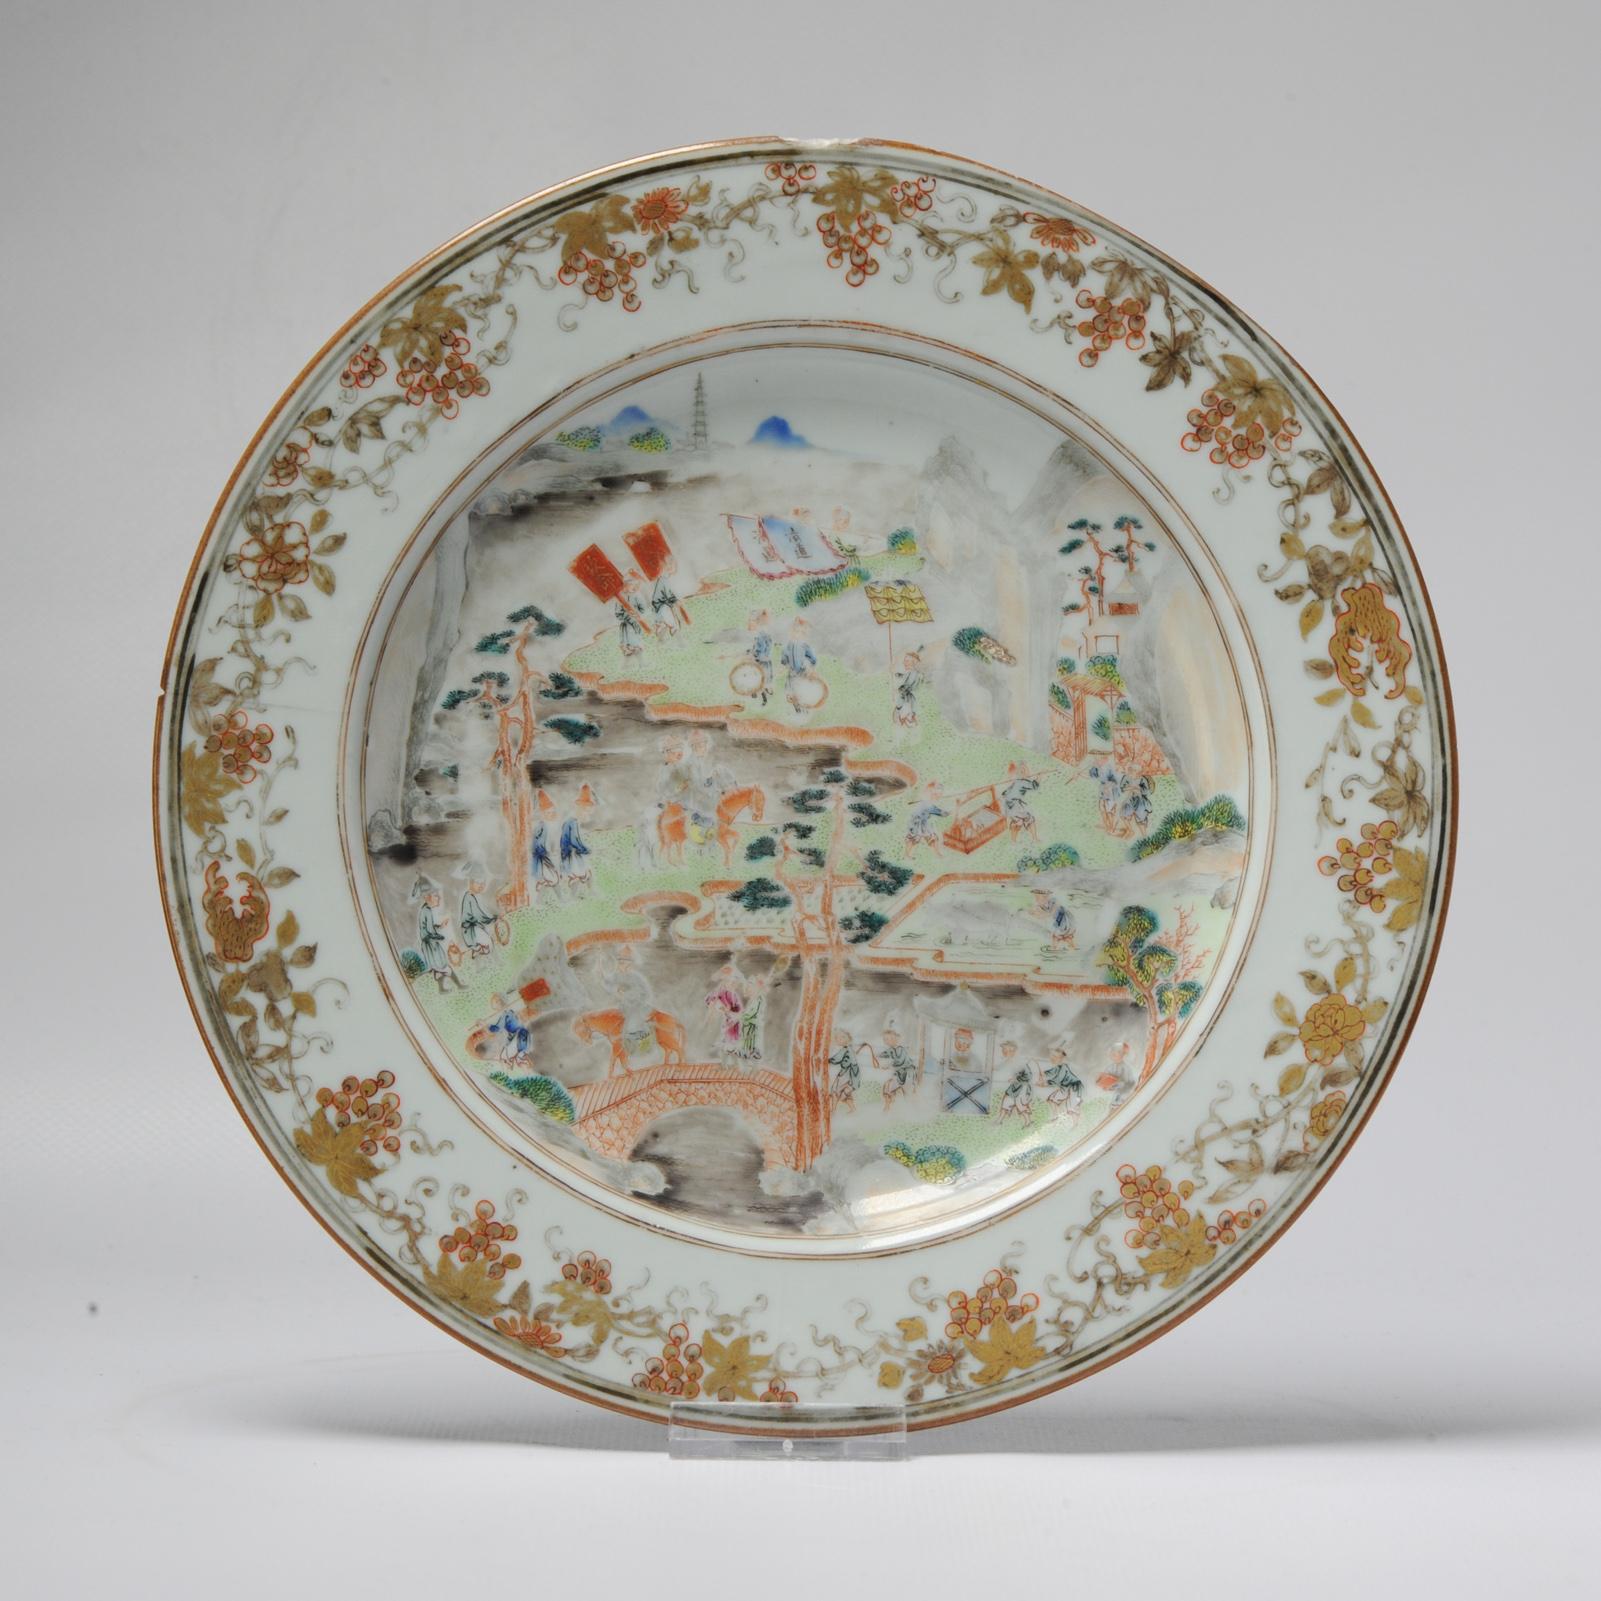 Qing Antique 18th C Chinese Porcelain Fencai Dish China Famille Rose Qianlong Period